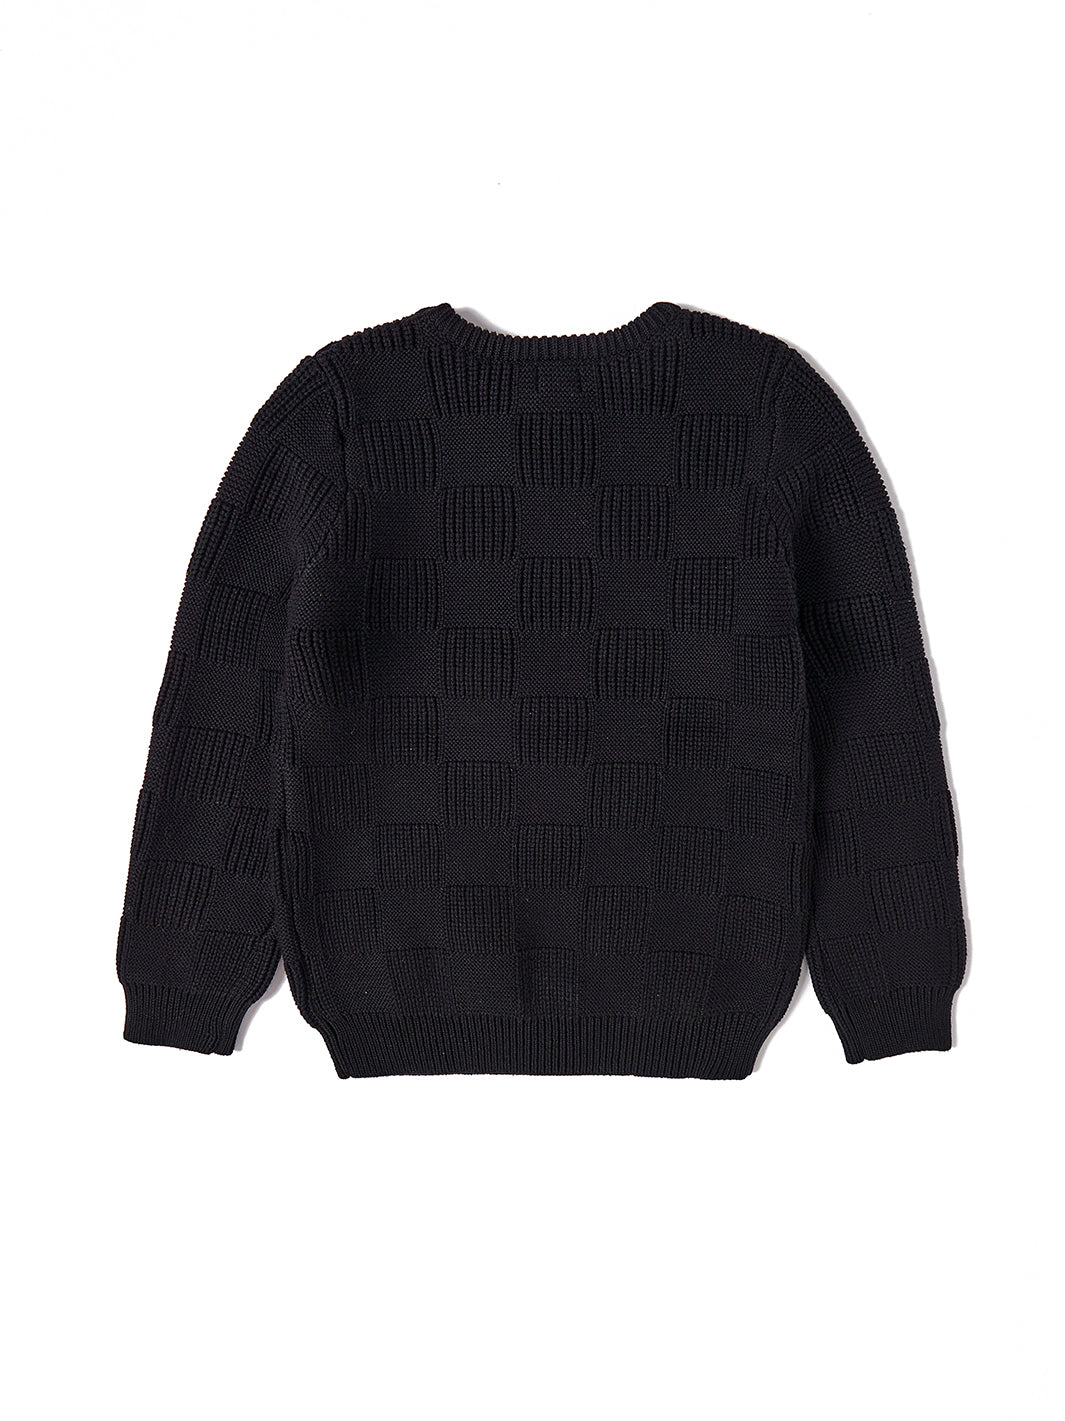 Square Knit Sweater - Black